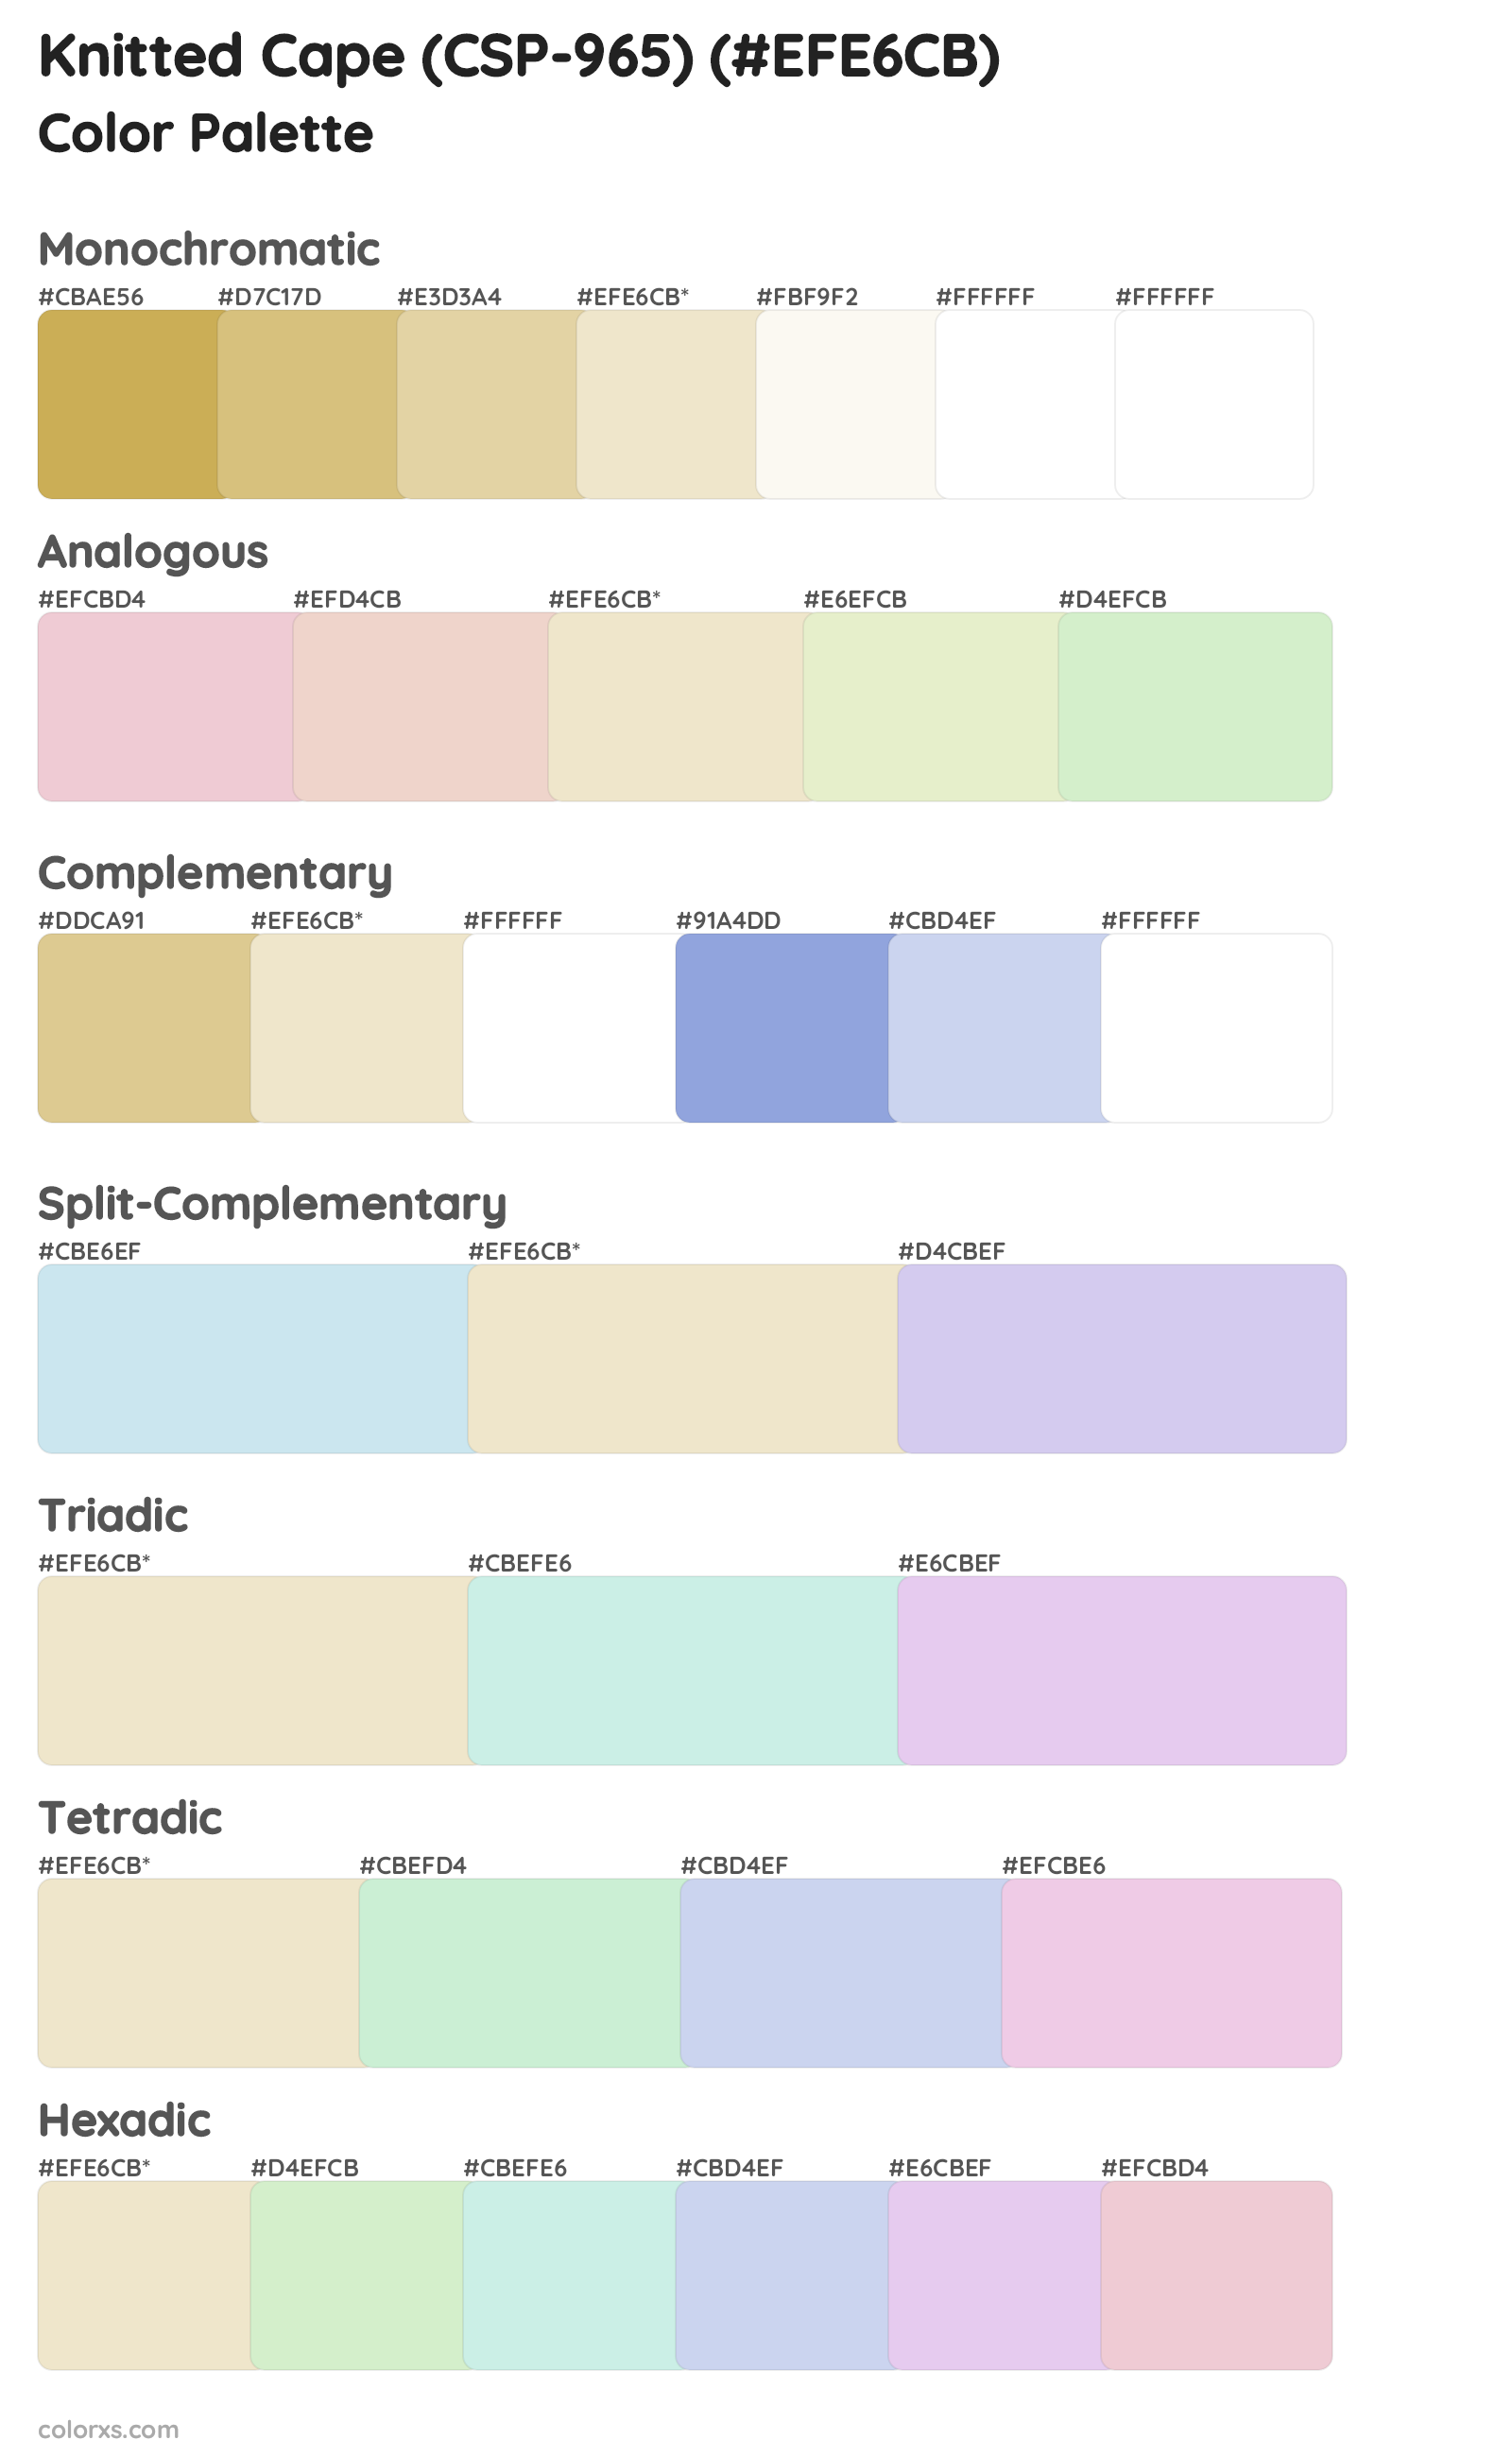 Knitted Cape (CSP-965) Color Scheme Palettes